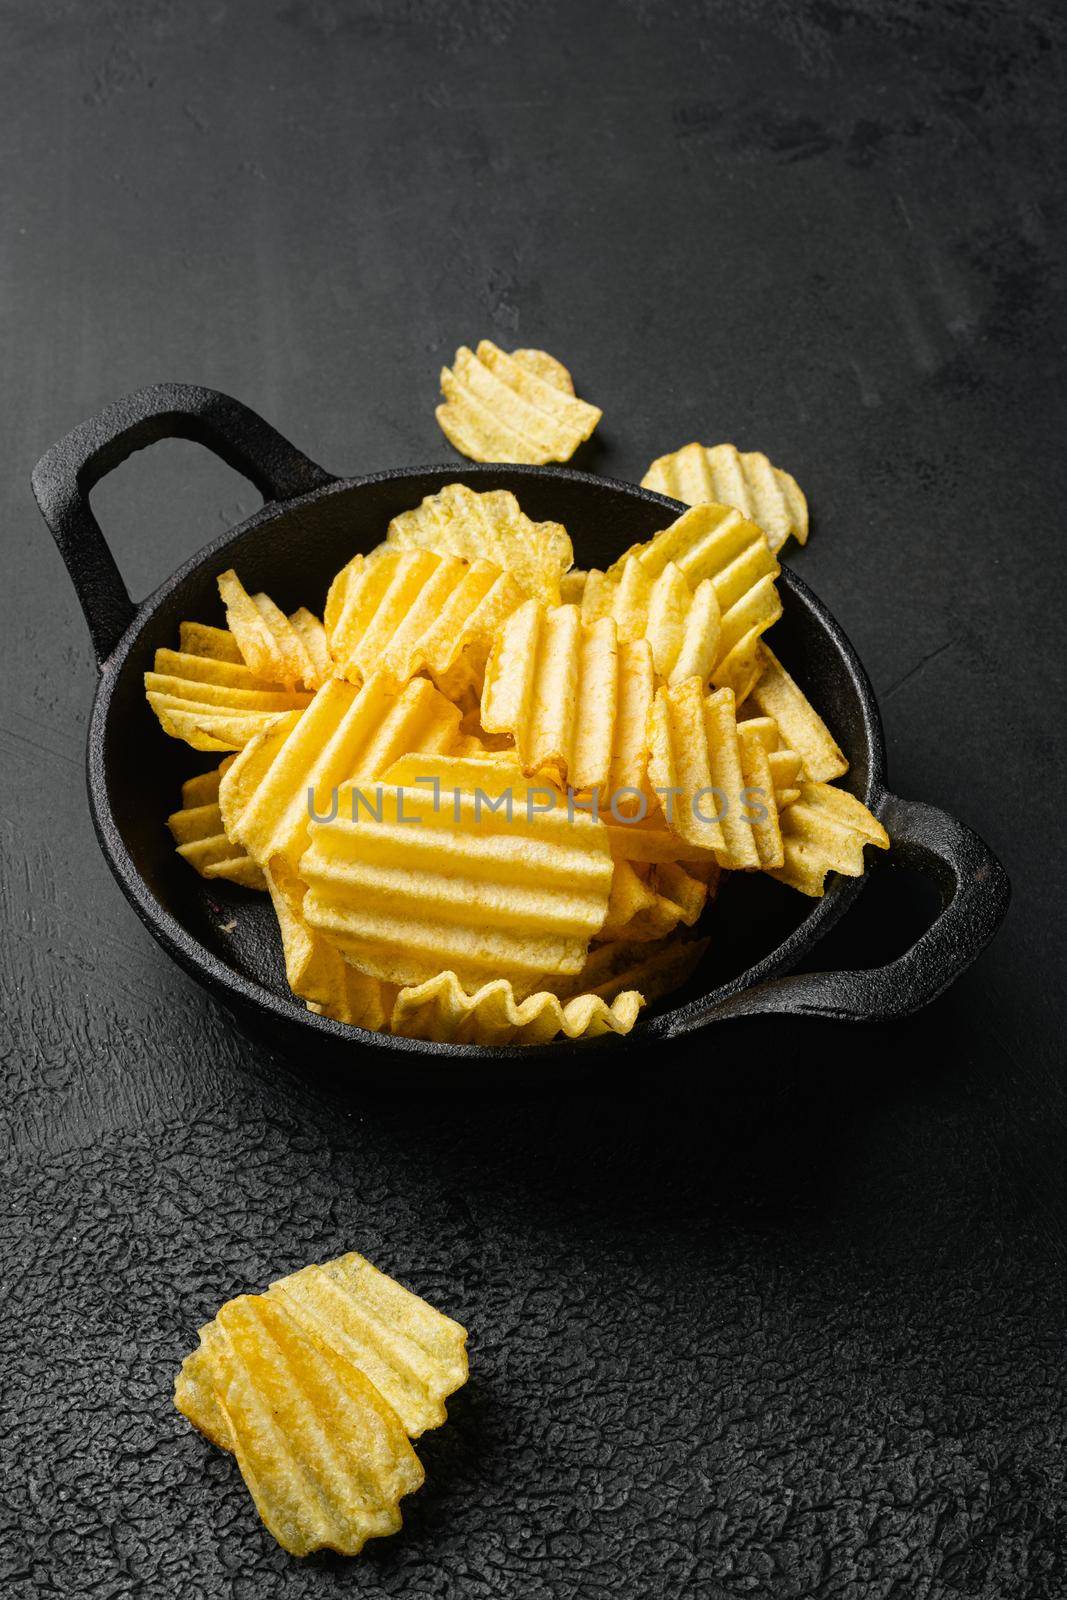 Wavy Lightly Salted Potato Chips on black dark stone table background by Ilianesolenyi